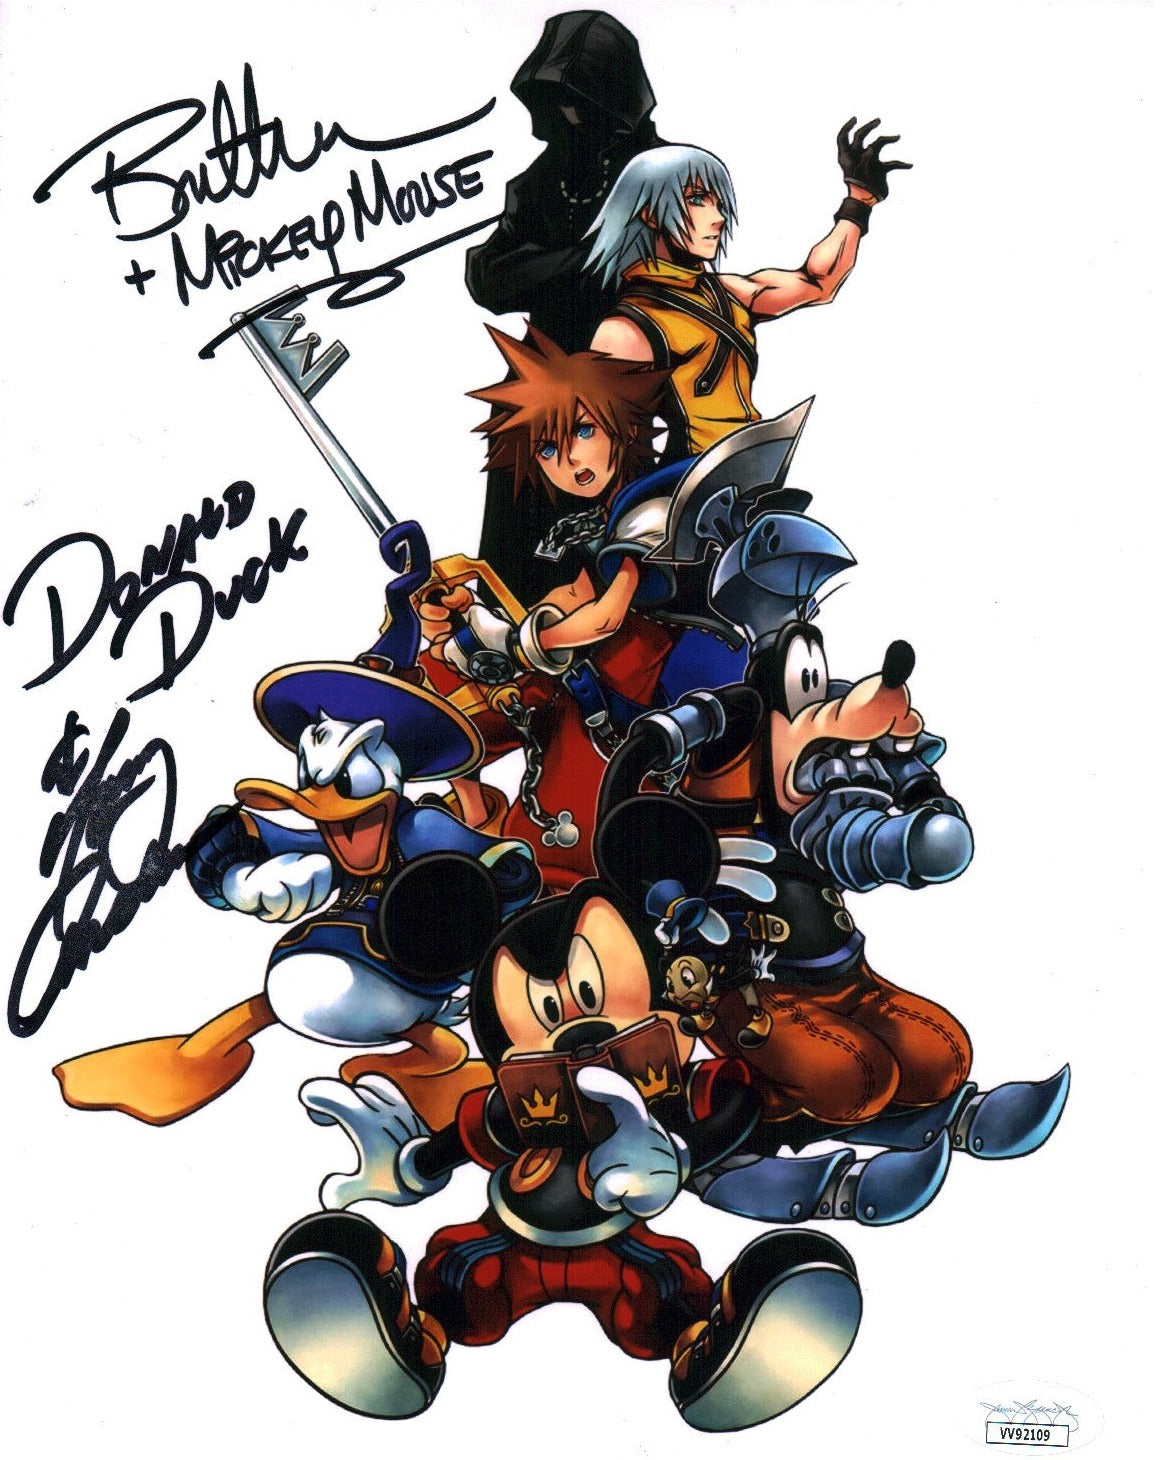 Disney Kingdom Hearts 8x10 Signed Photo Anselmo Iwan JSA COA Certified Autograph